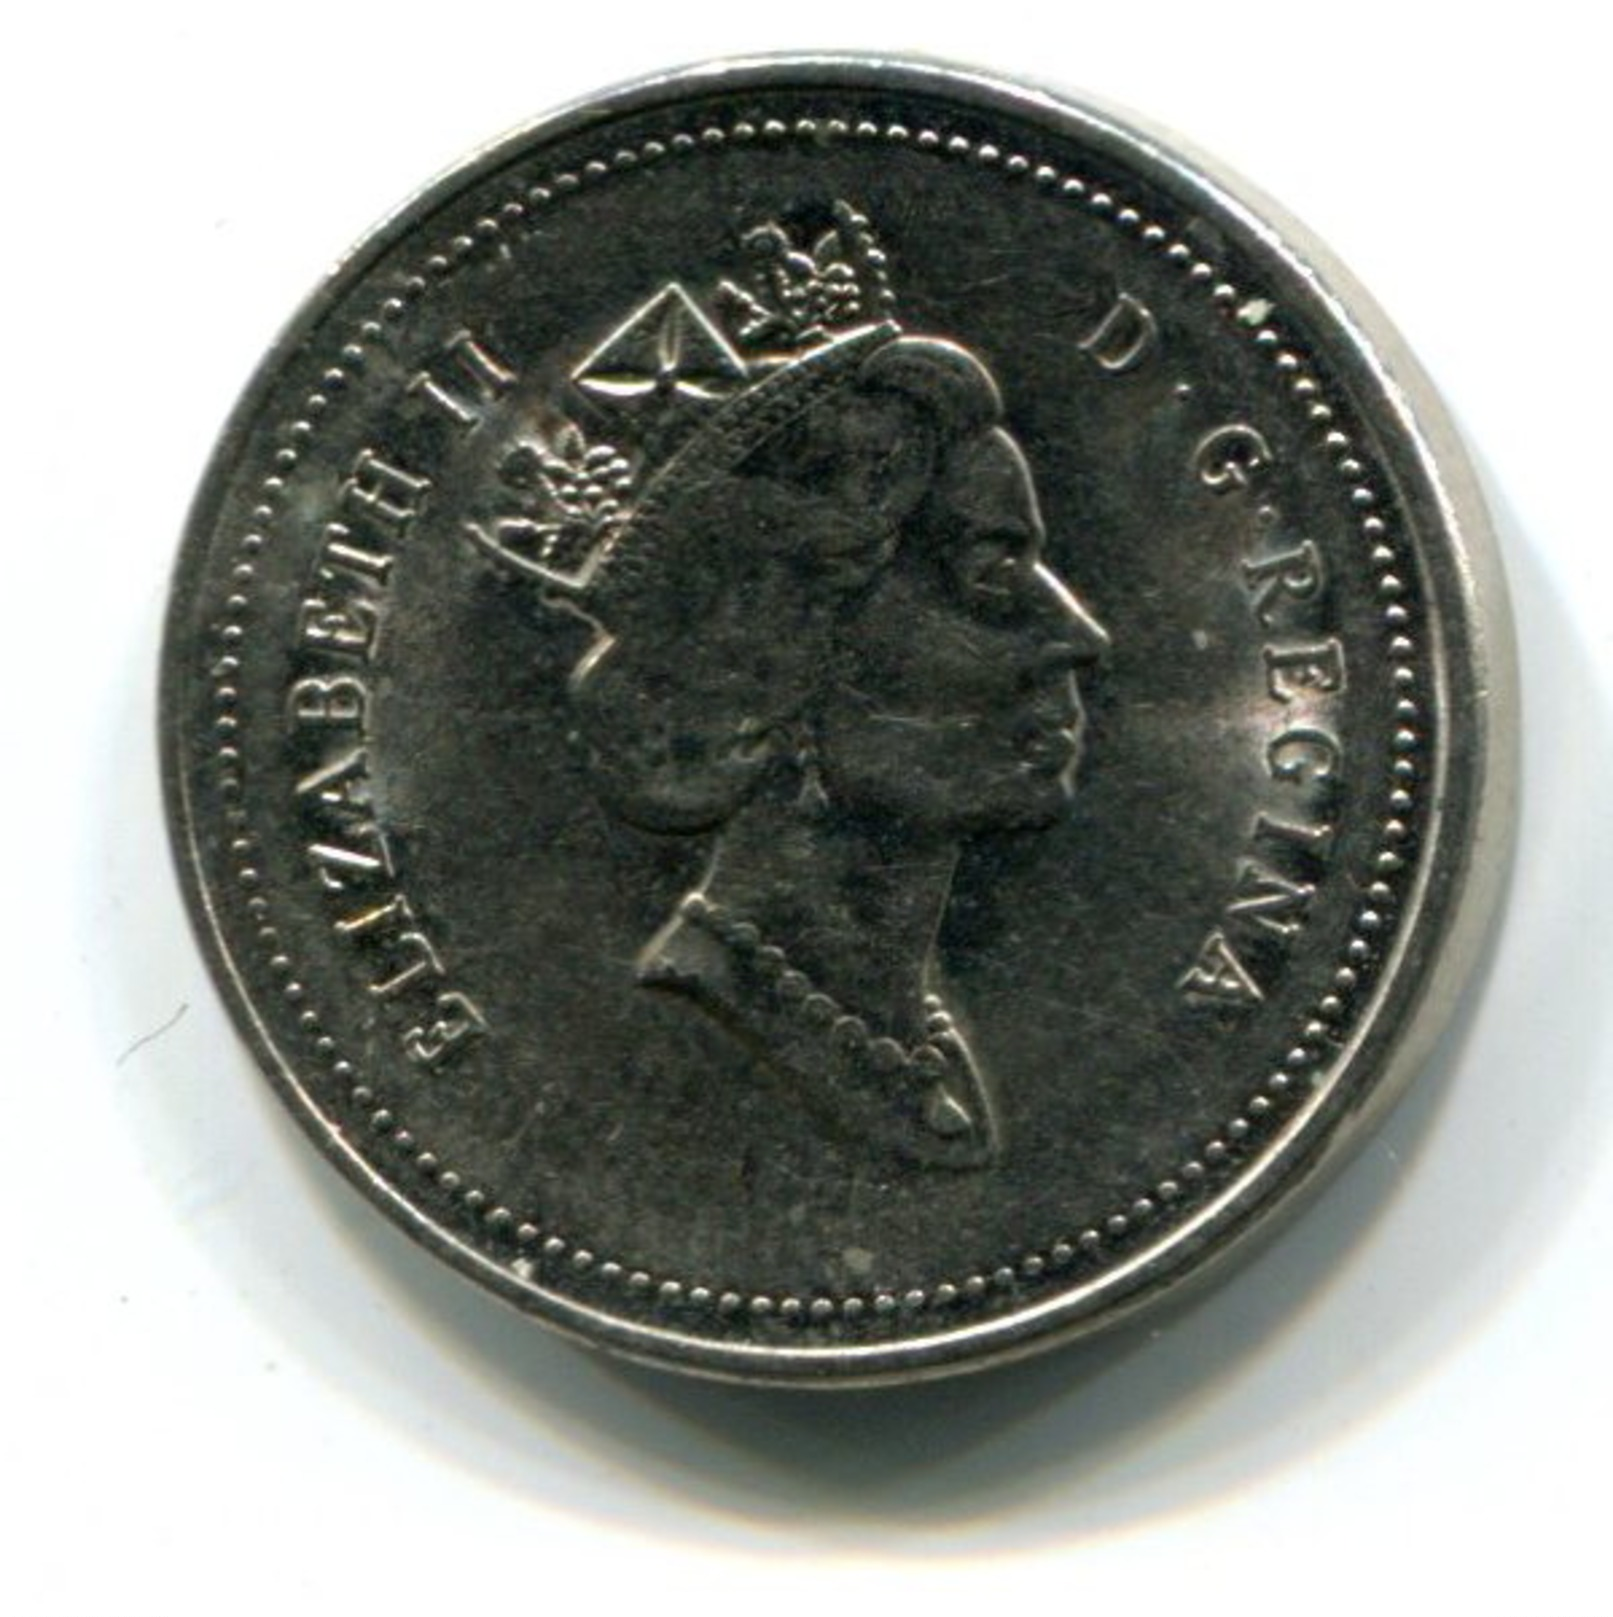 1997 Canada 5c Coin - Canada